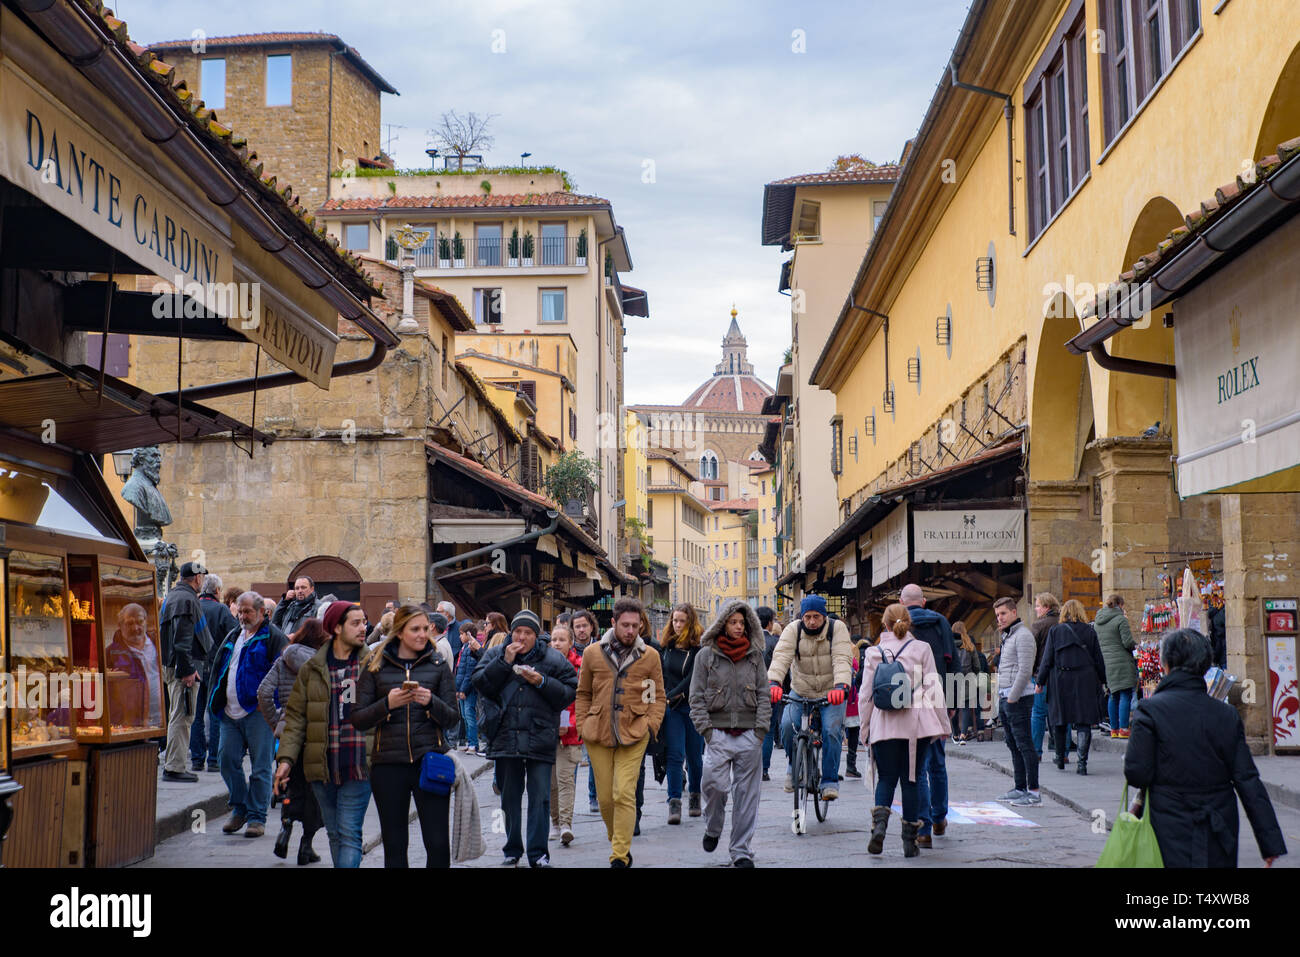 People walking on Ponte Vecchio (Old Bridge), a medieval stone bridge with shops on it, Florence, Italy Stock Photo